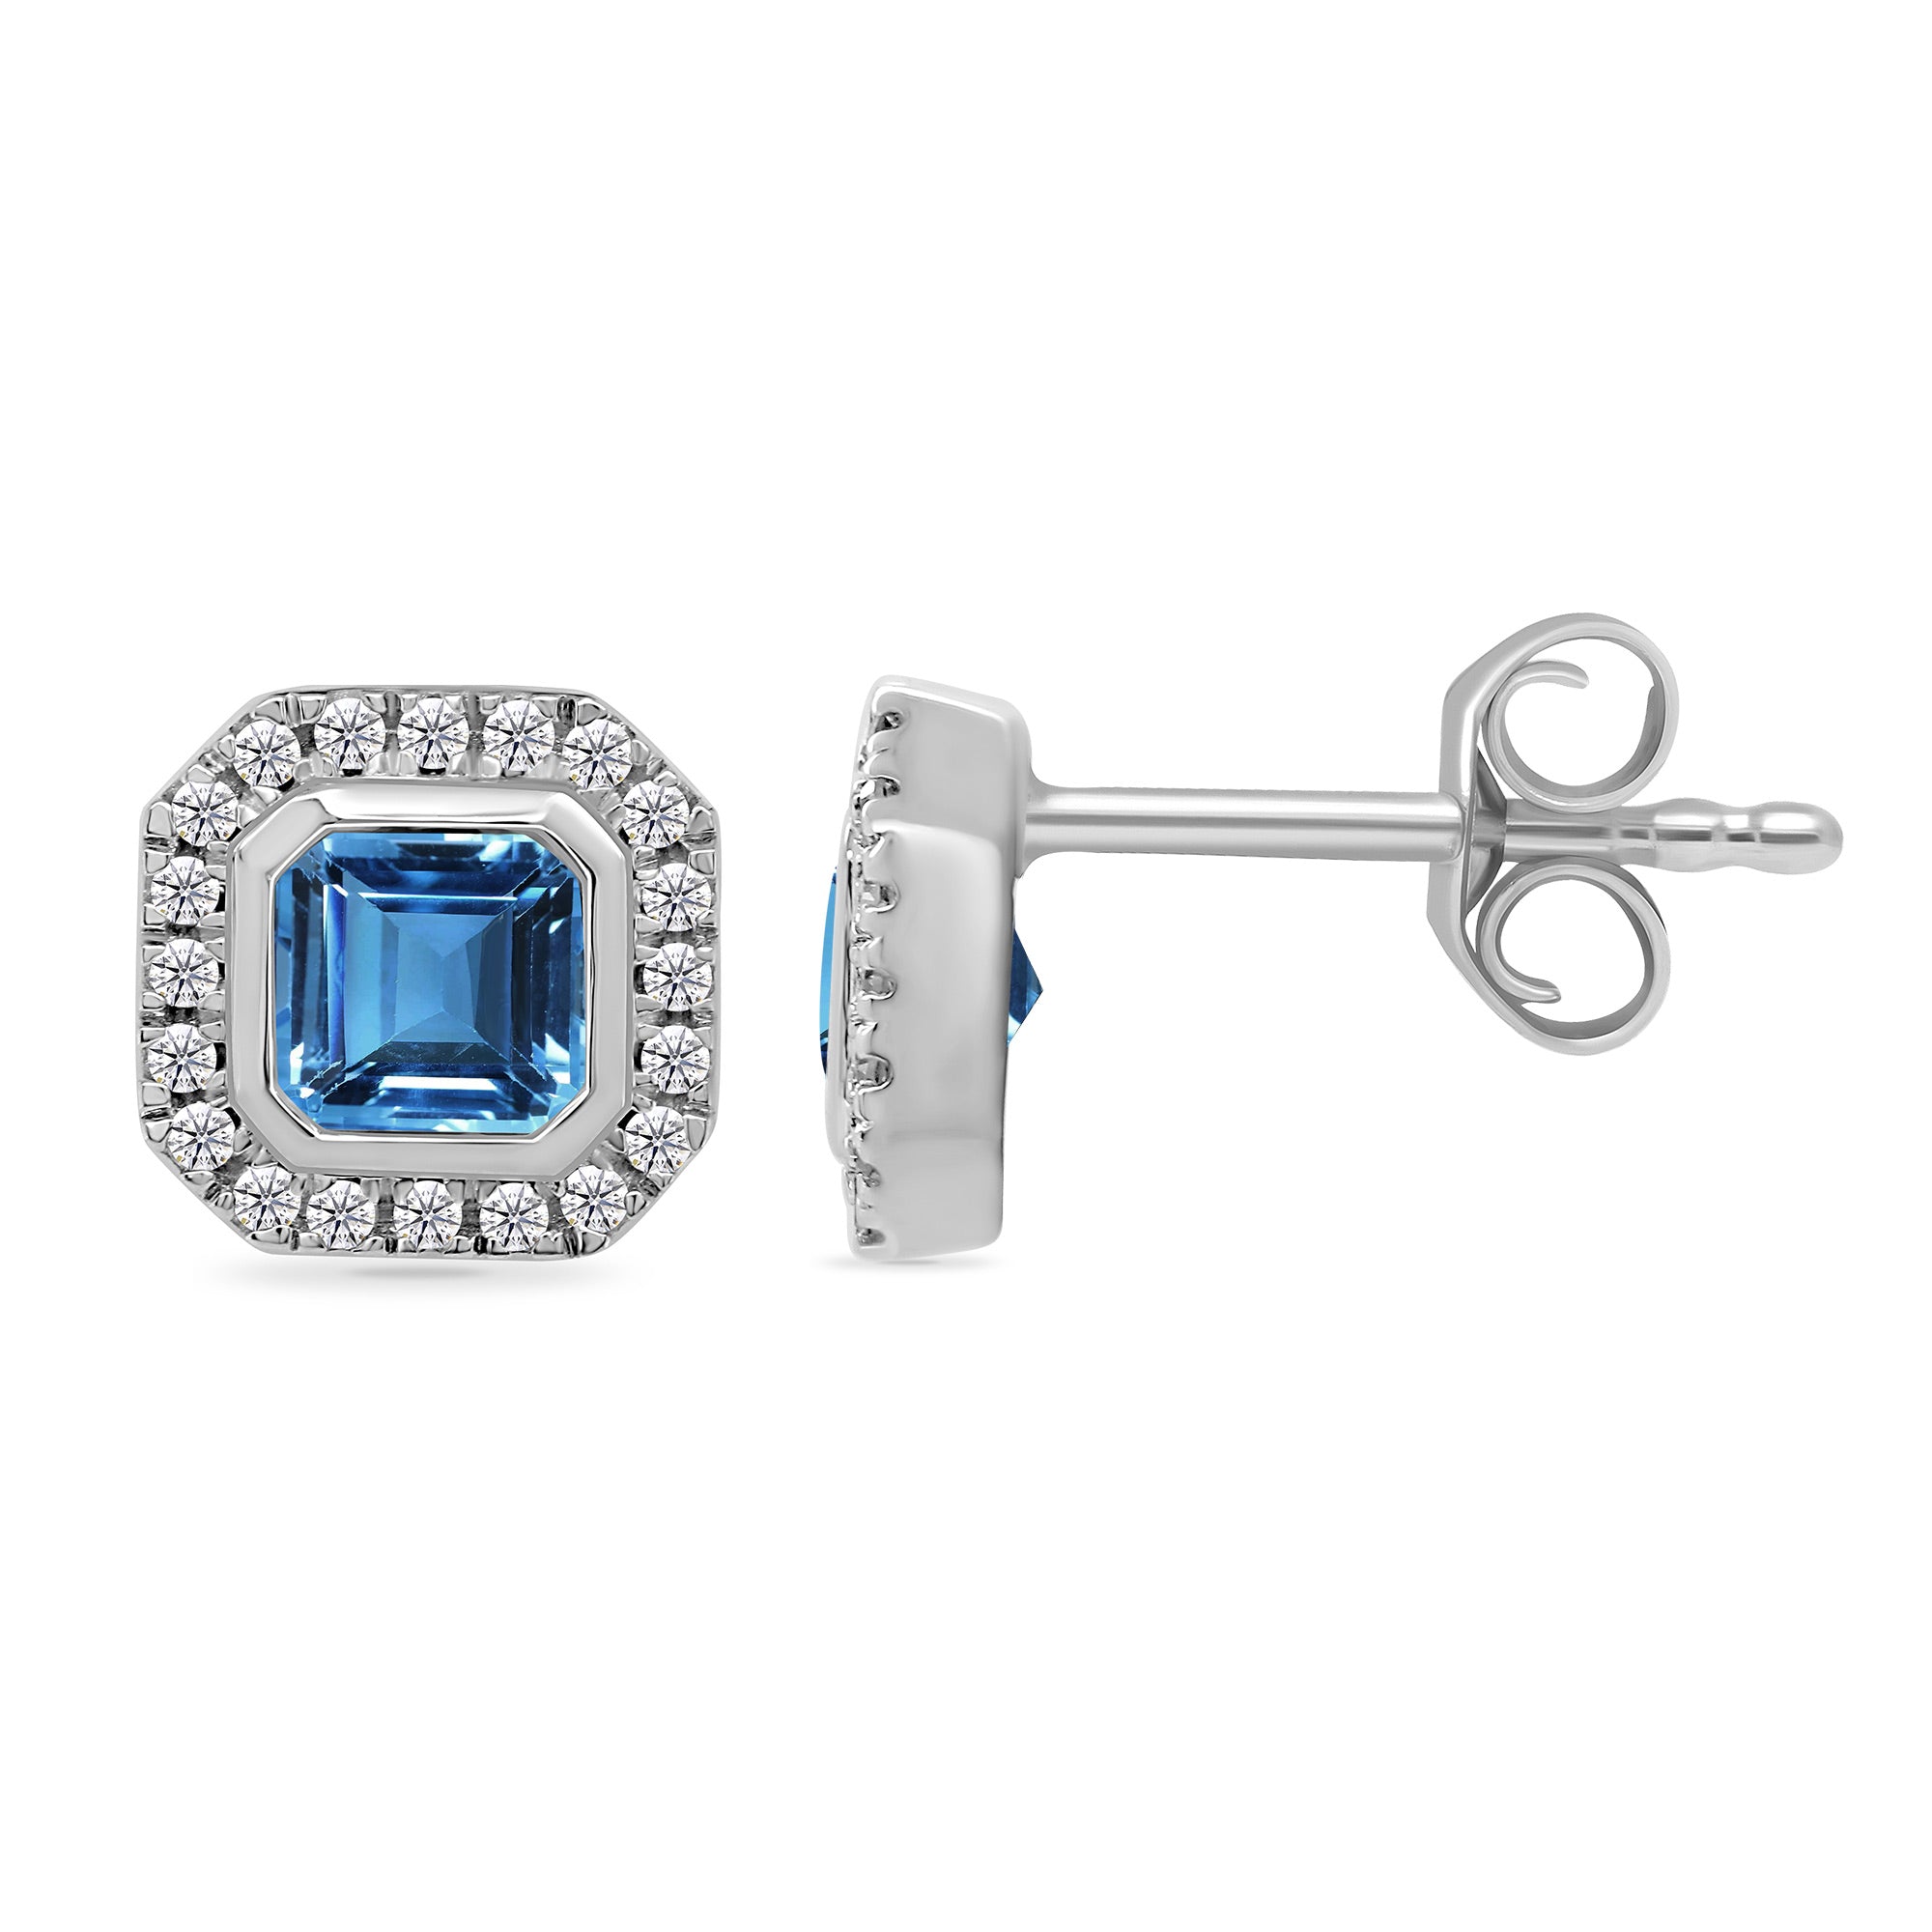 9ct white gold 4mm square blue topaz & diamond cluster stud earrings 0.13ct